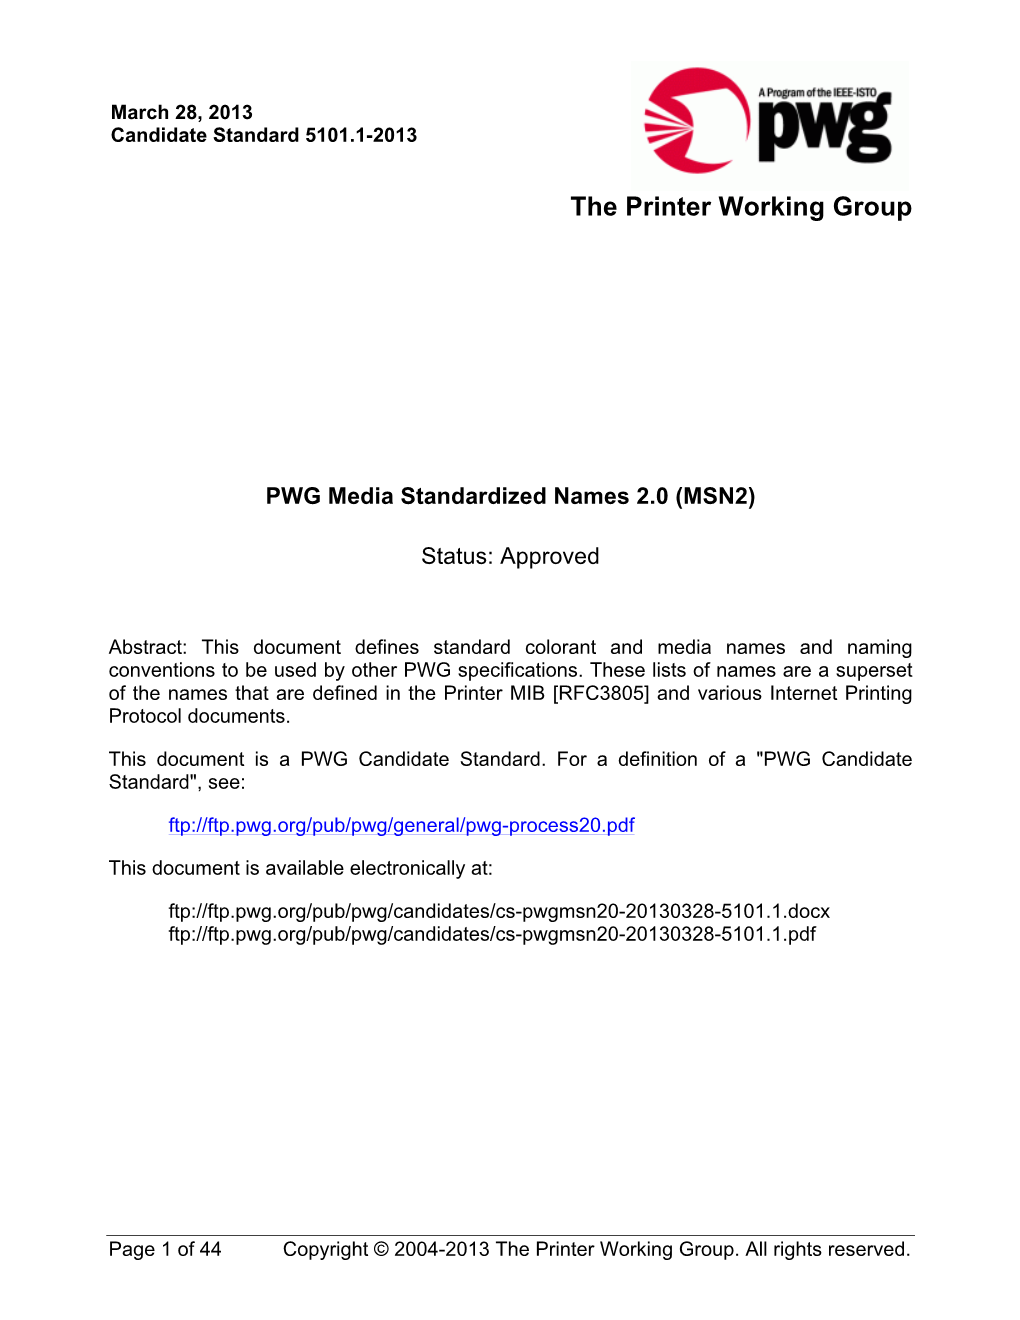 IEEE-ISTO PWG 5101.1-2013 "PWG Media Standardized Names 2.0"